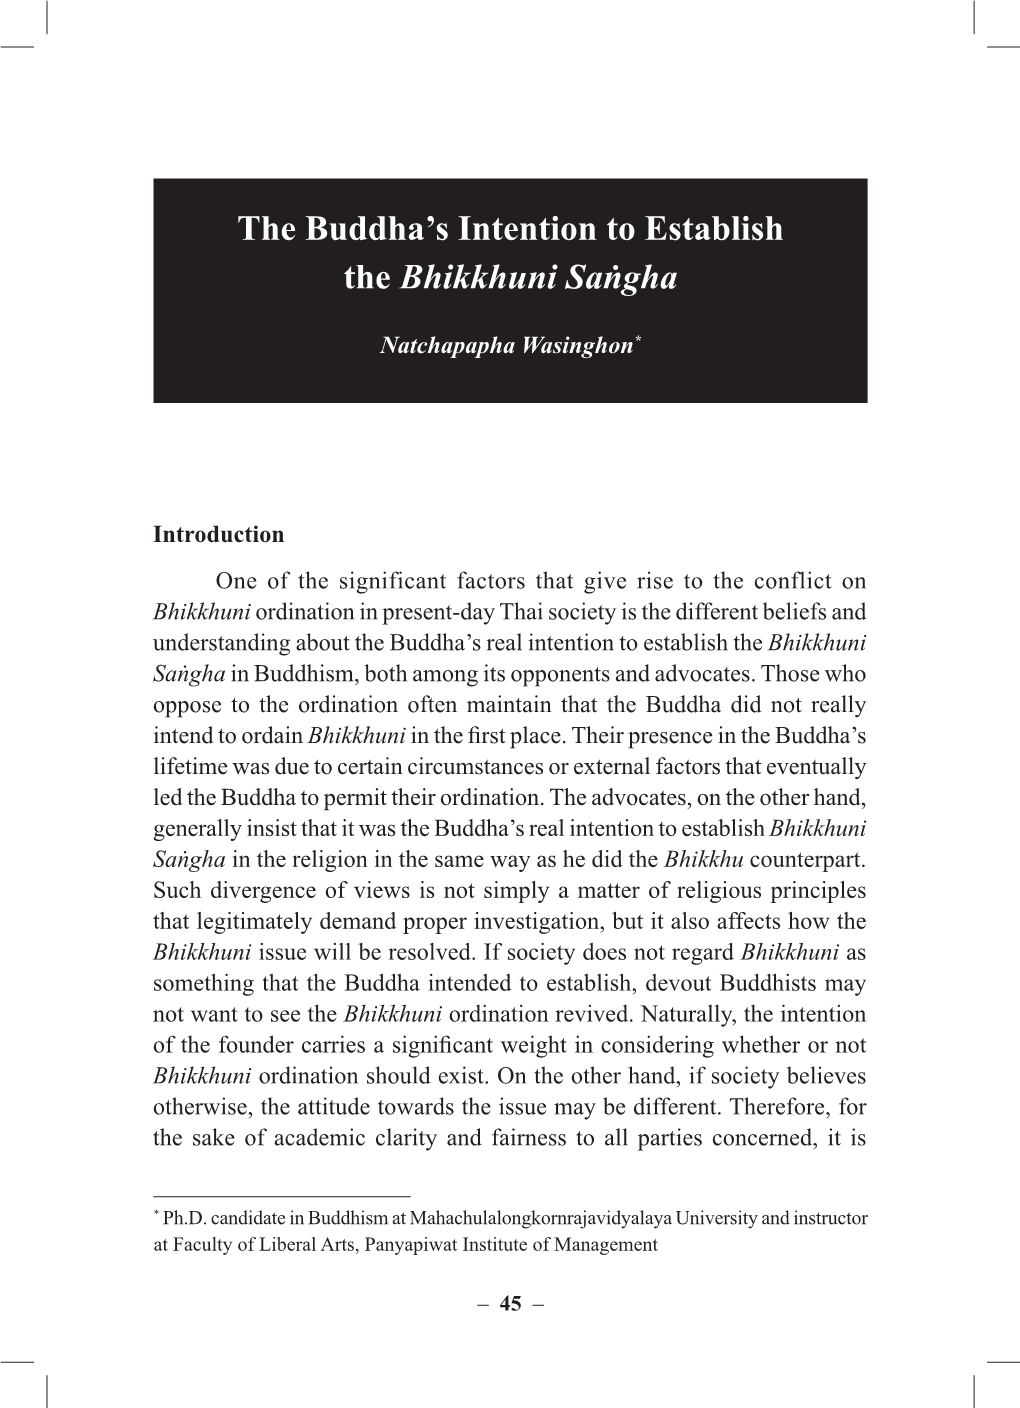 The Buddha's Intention to Establish the Bhikkhuni Saṅgha